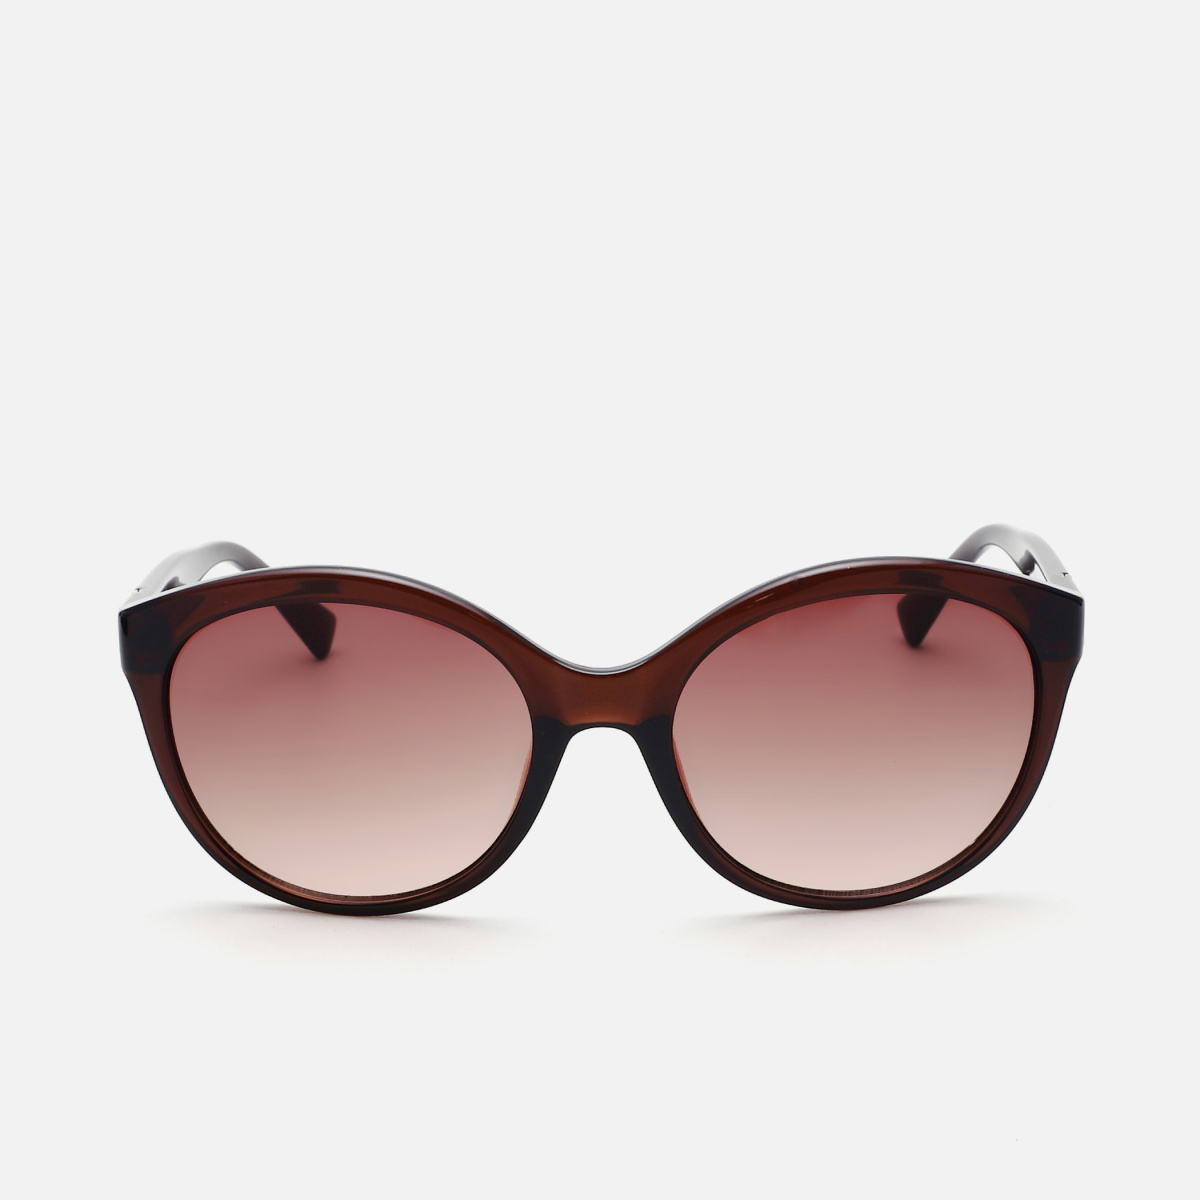 BEBE Women UV-Protected Oval Sunglasses- BEBE3053C2S